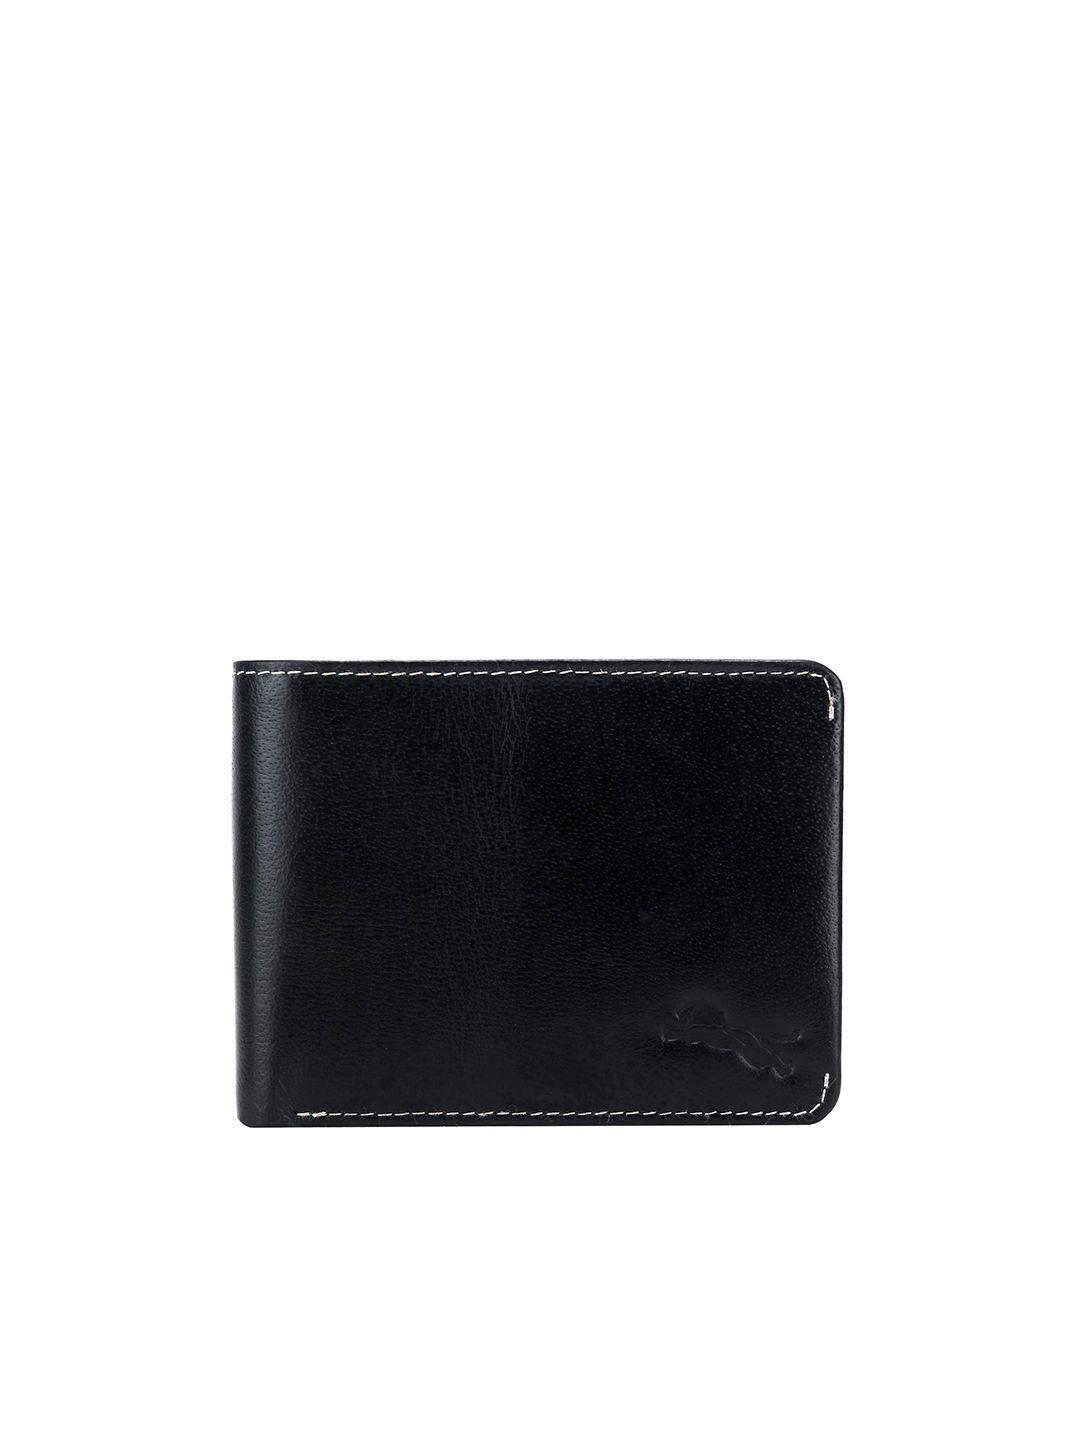 lionzy men black leather two fold wallet